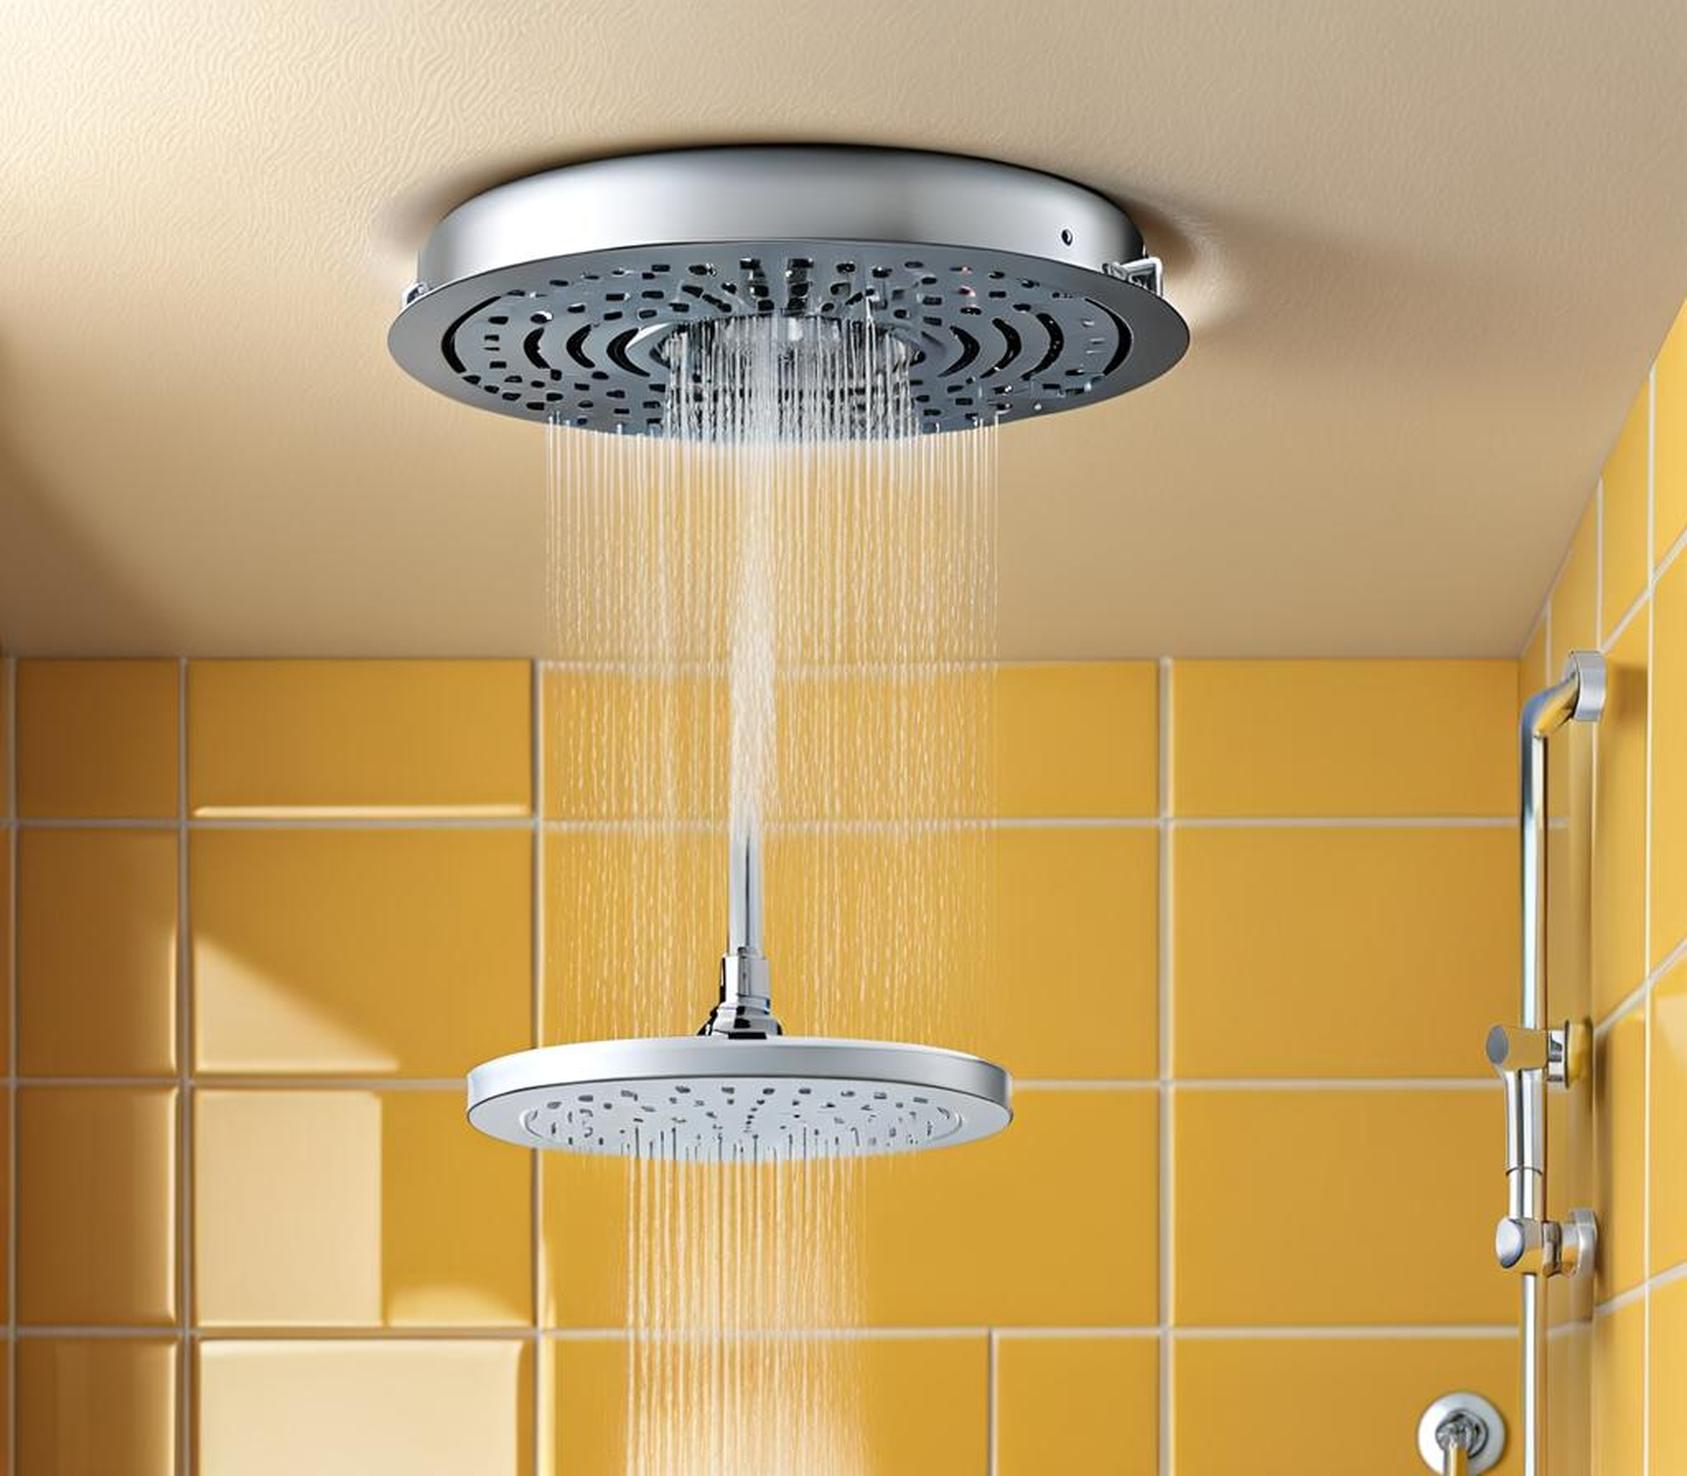 shower drain leaking through ceiling